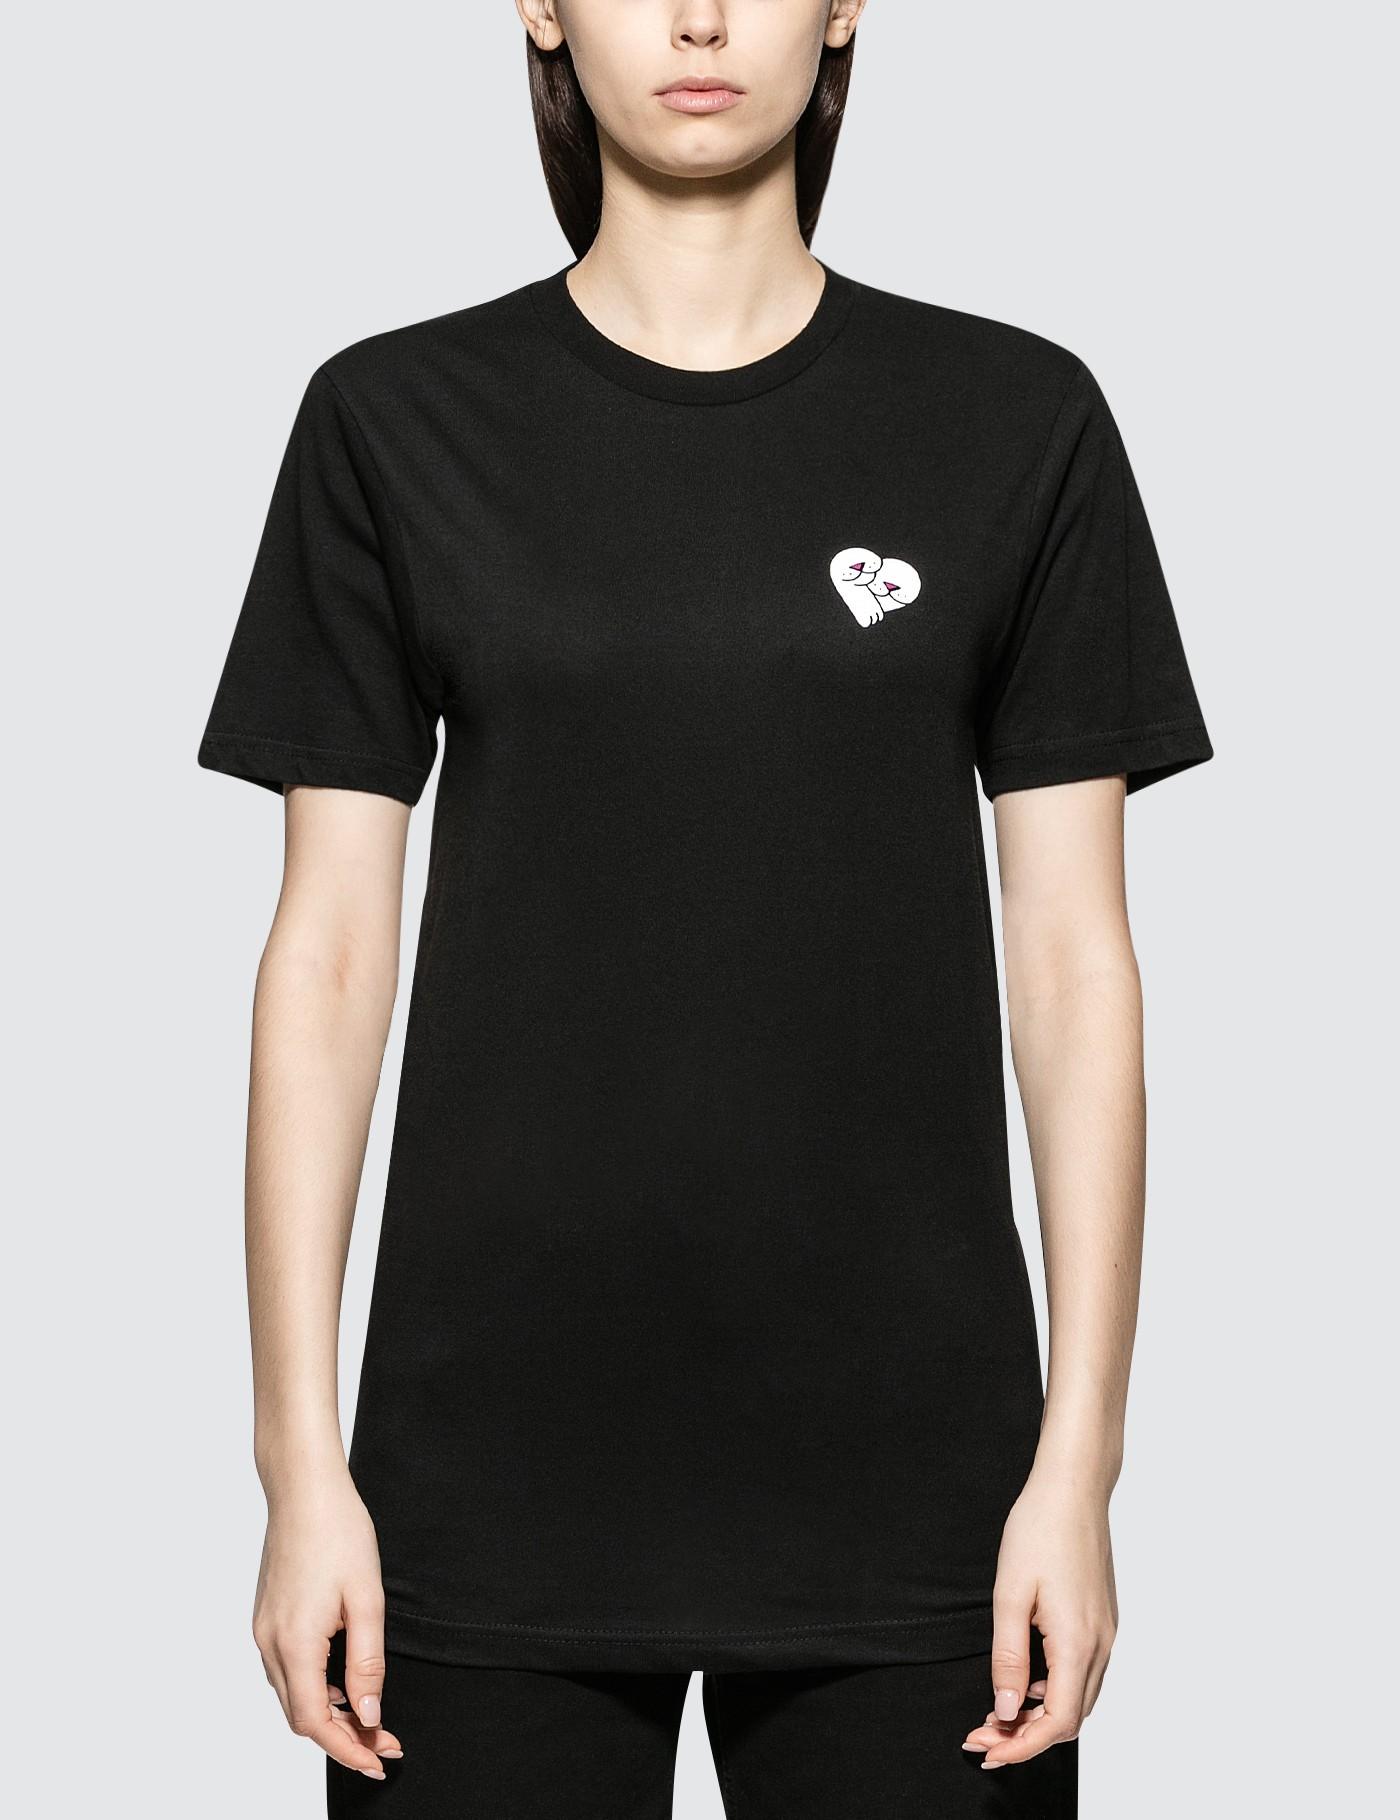 RIPNDIP Love Nerm Short Sleeve T-shirt in Black - Lyst